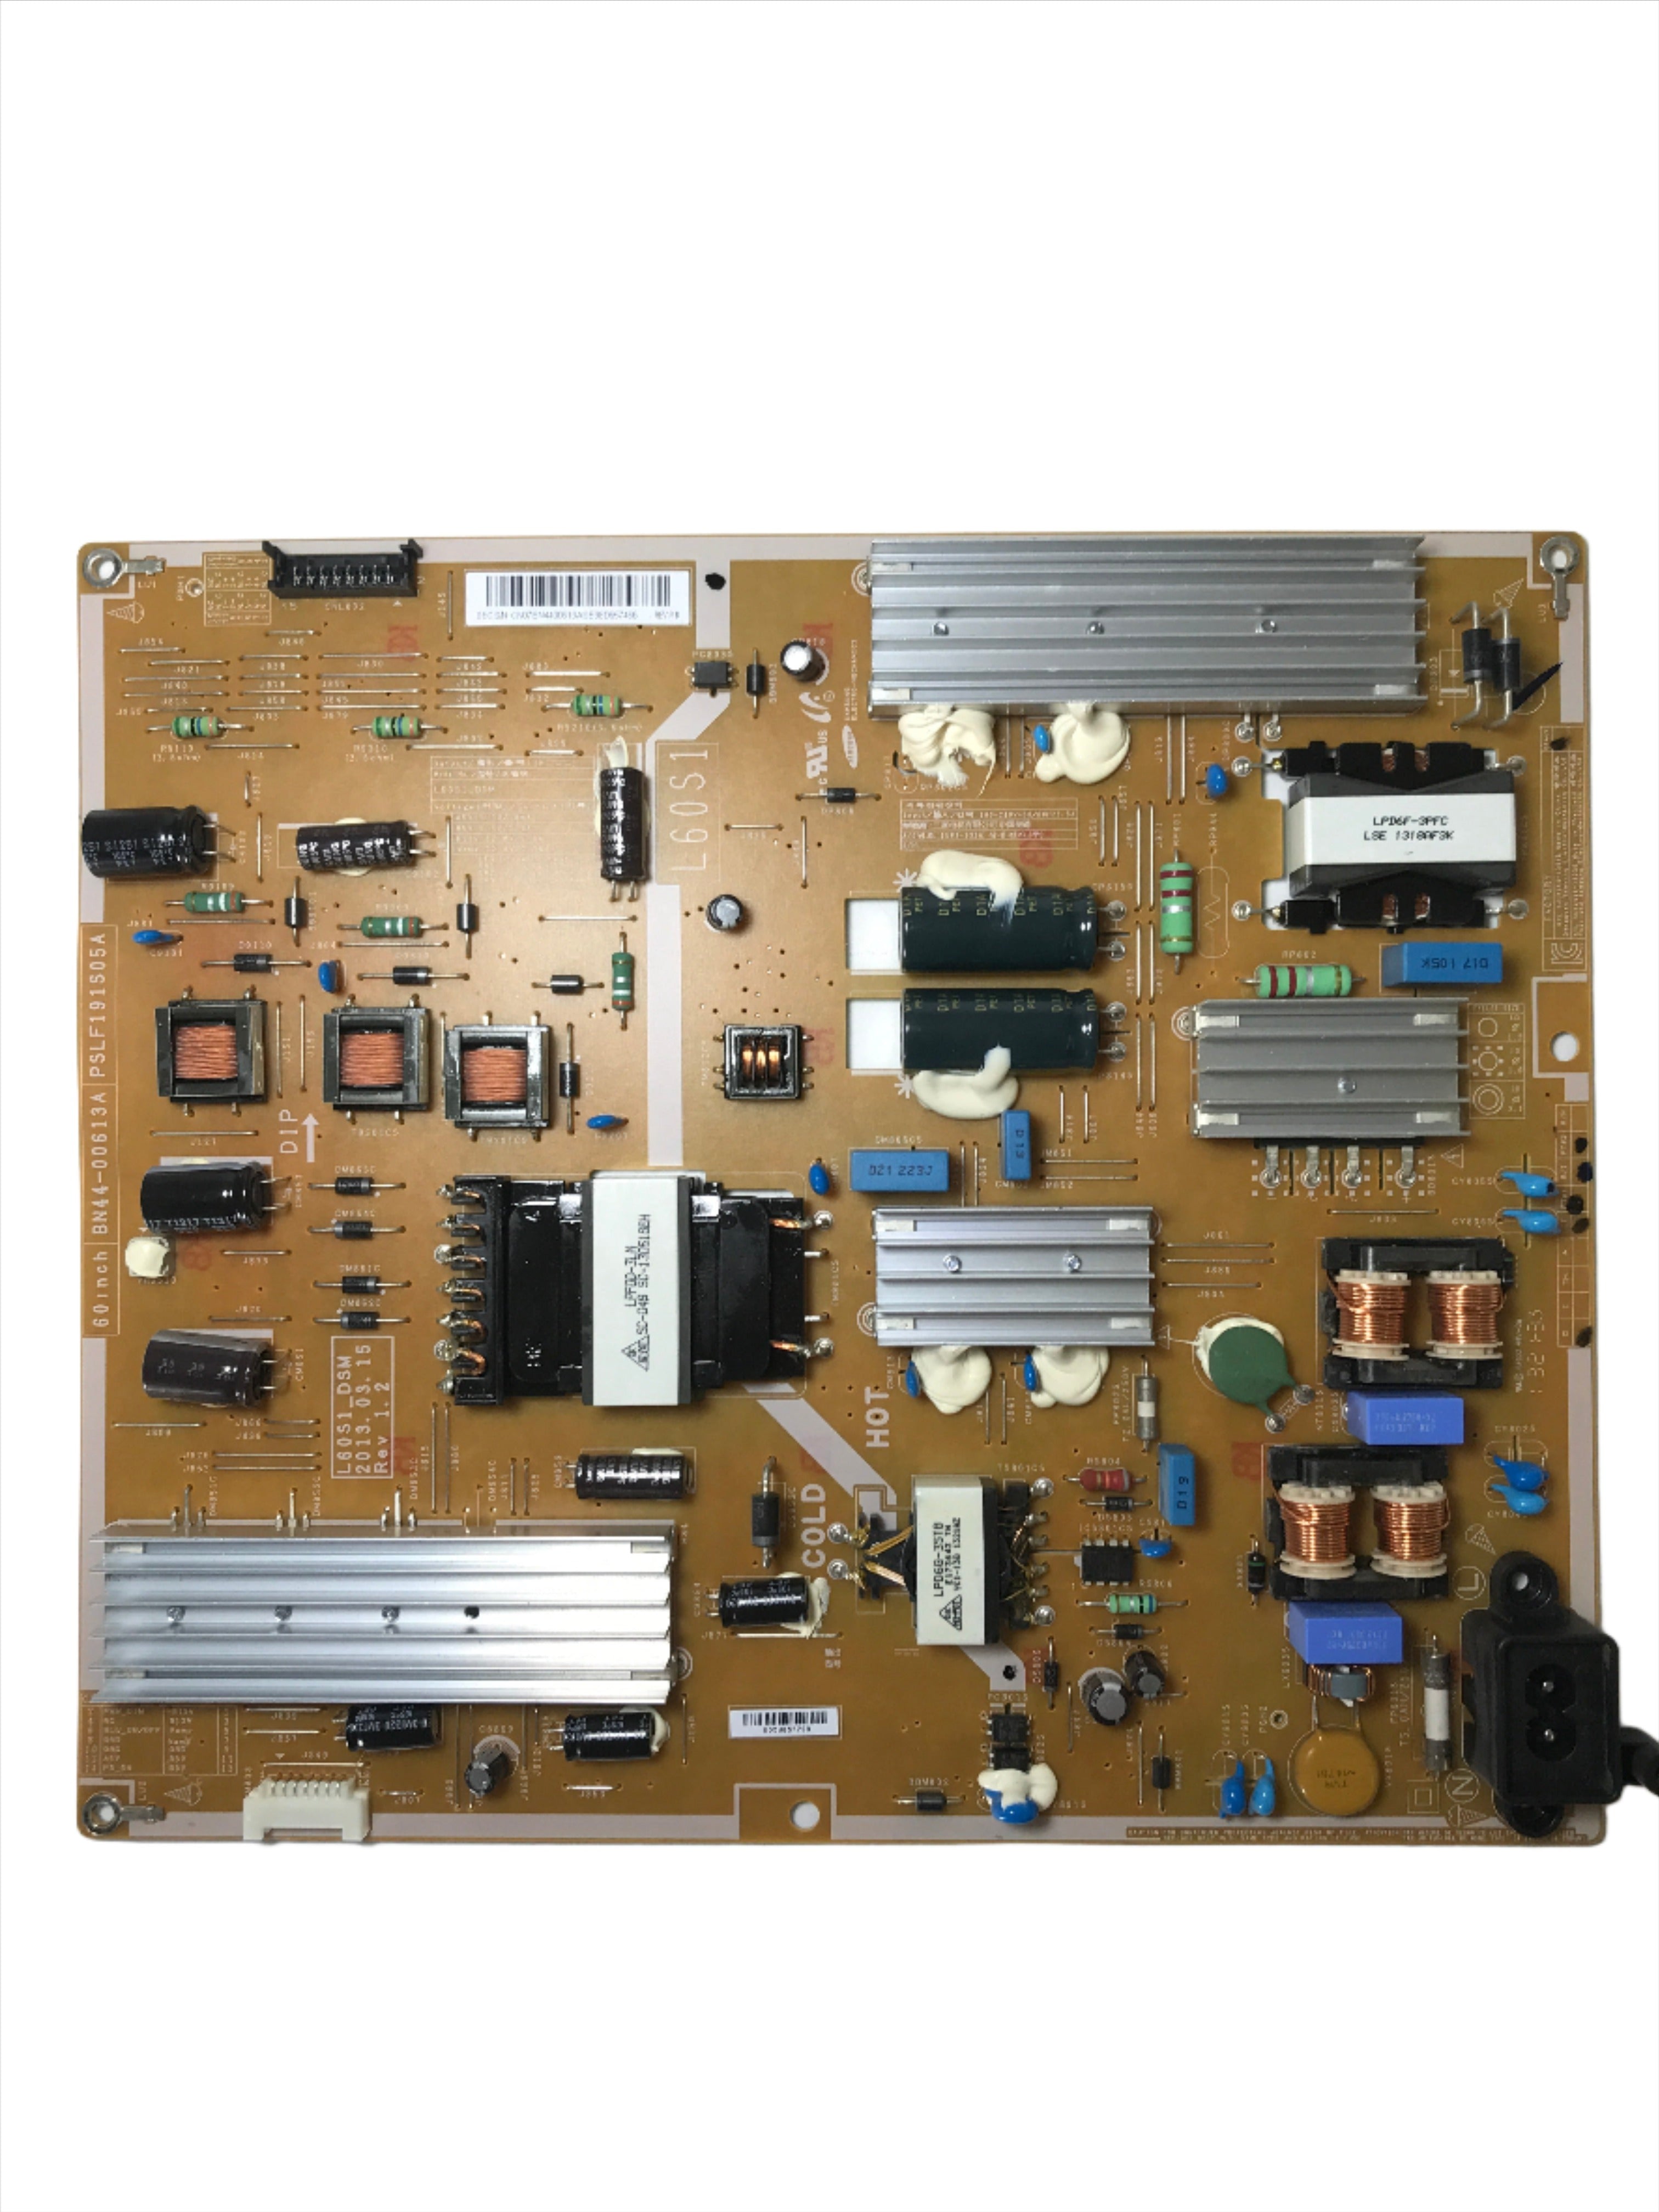 Samsung BN44-00613A (PSLF191S05A) Power Supply / LED Board